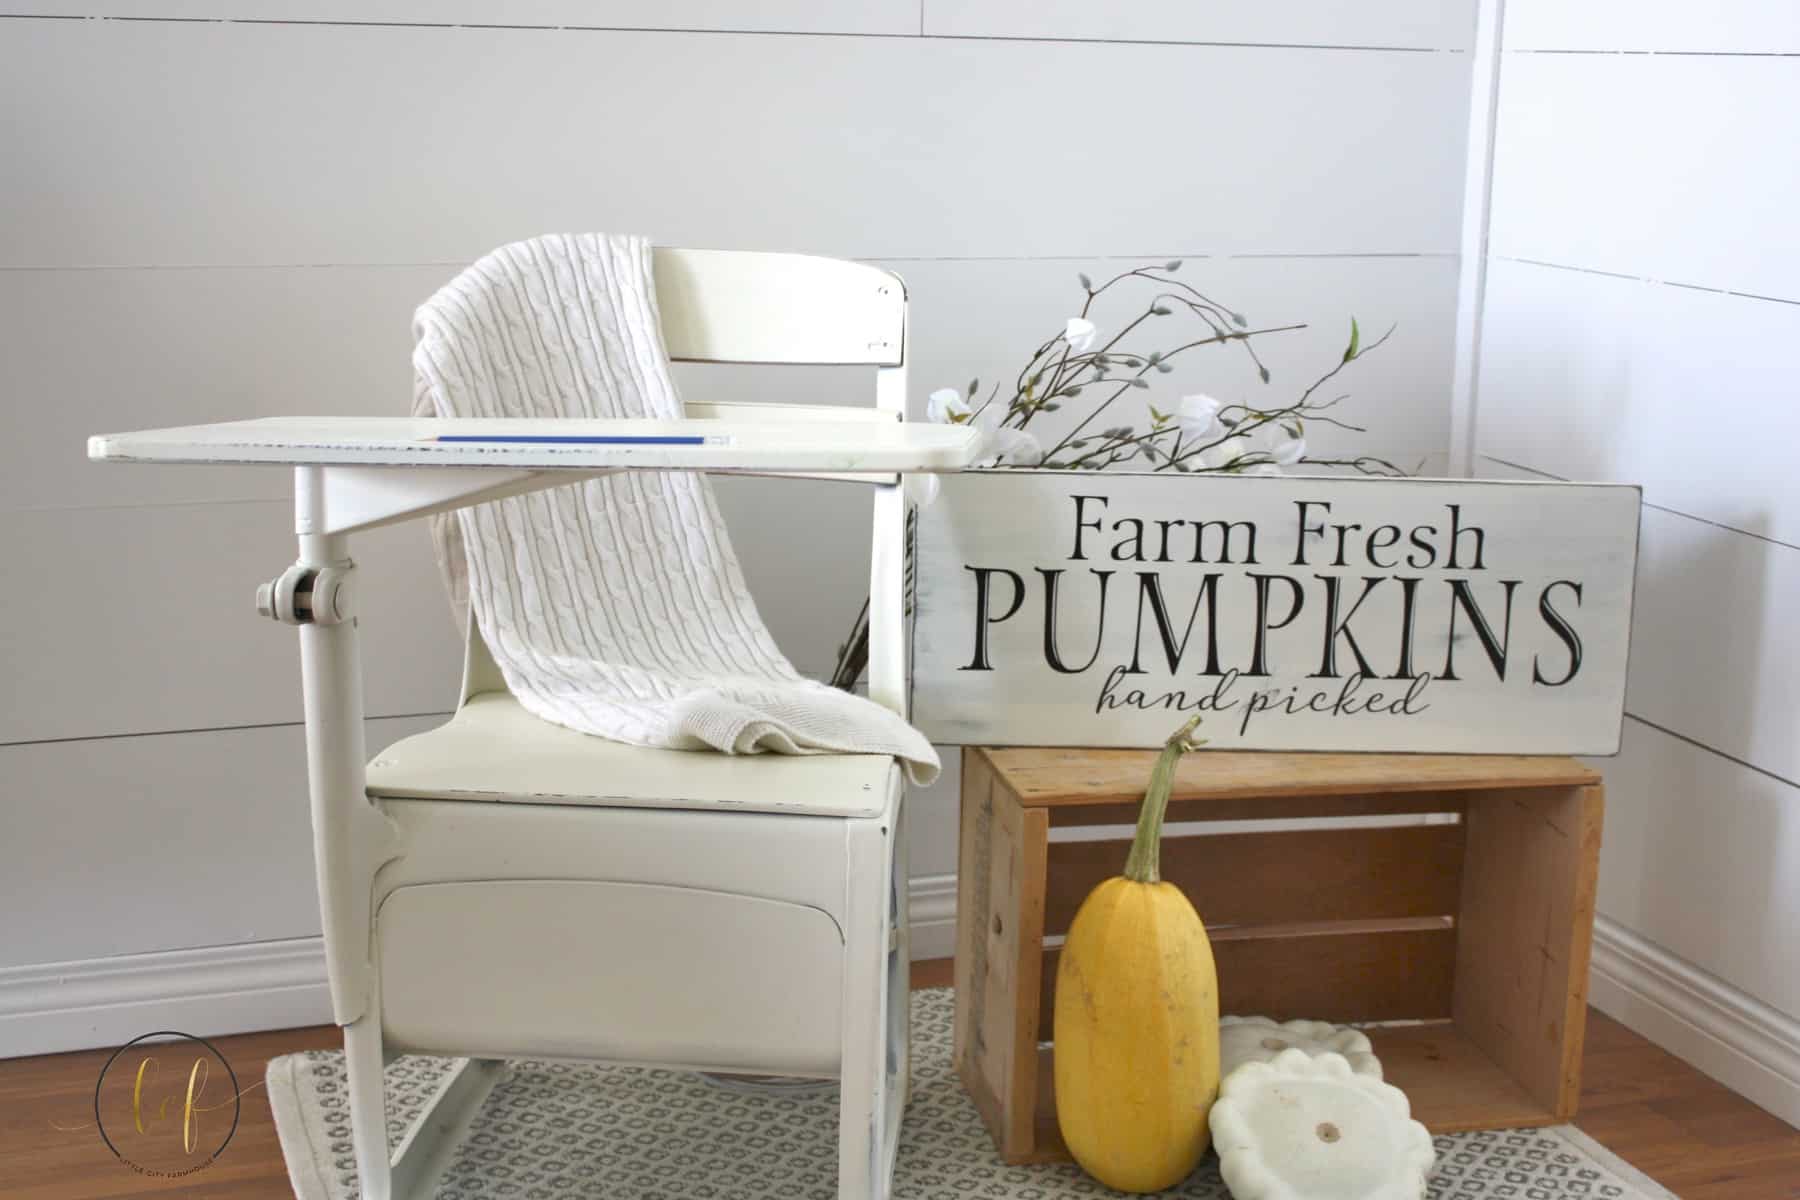 The Perfect White for a Vintage School Desk #DIY #furniturepaint #paintedfurniture #chalkpaint #vintage #desk #white #offwhite #primer #countrychicpaint - blog.countrychicpaint.com